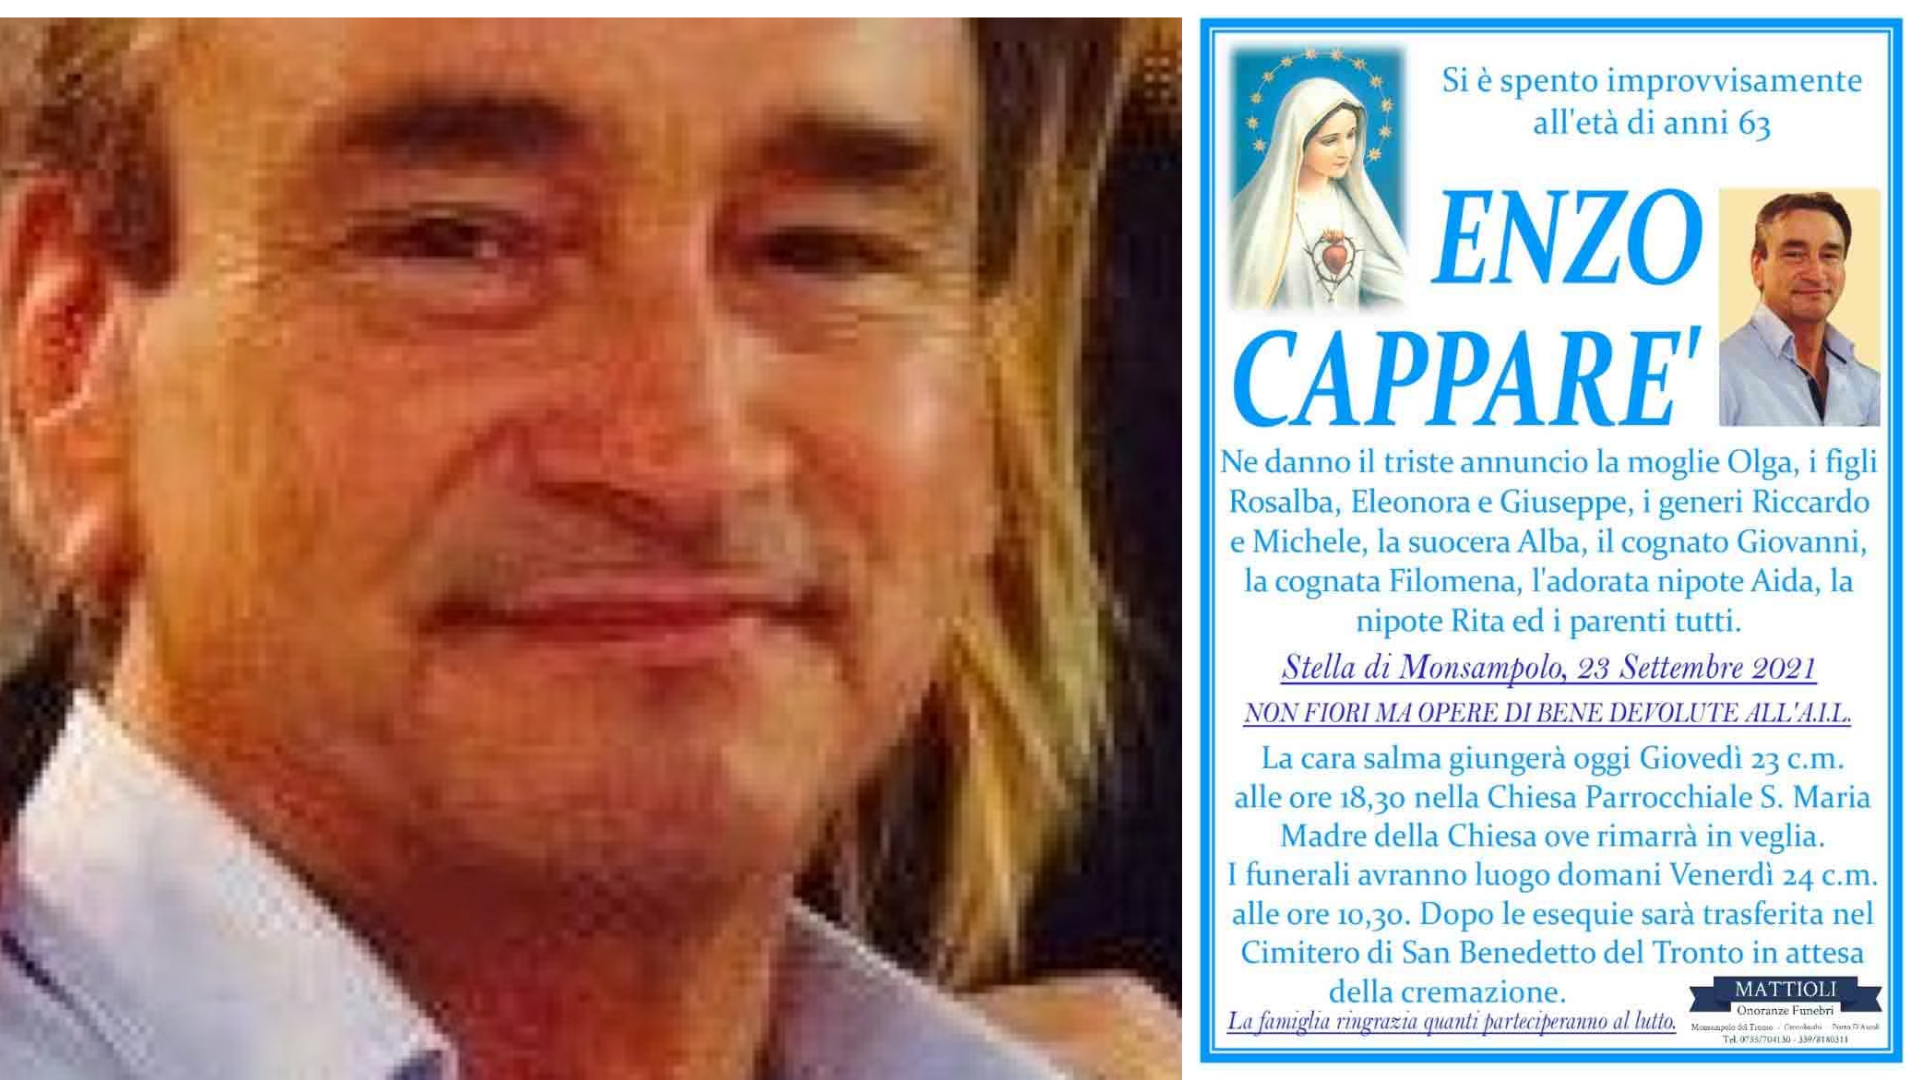 Funerali Enzo Capparè venerdì 24 settembre alle ore 10.30